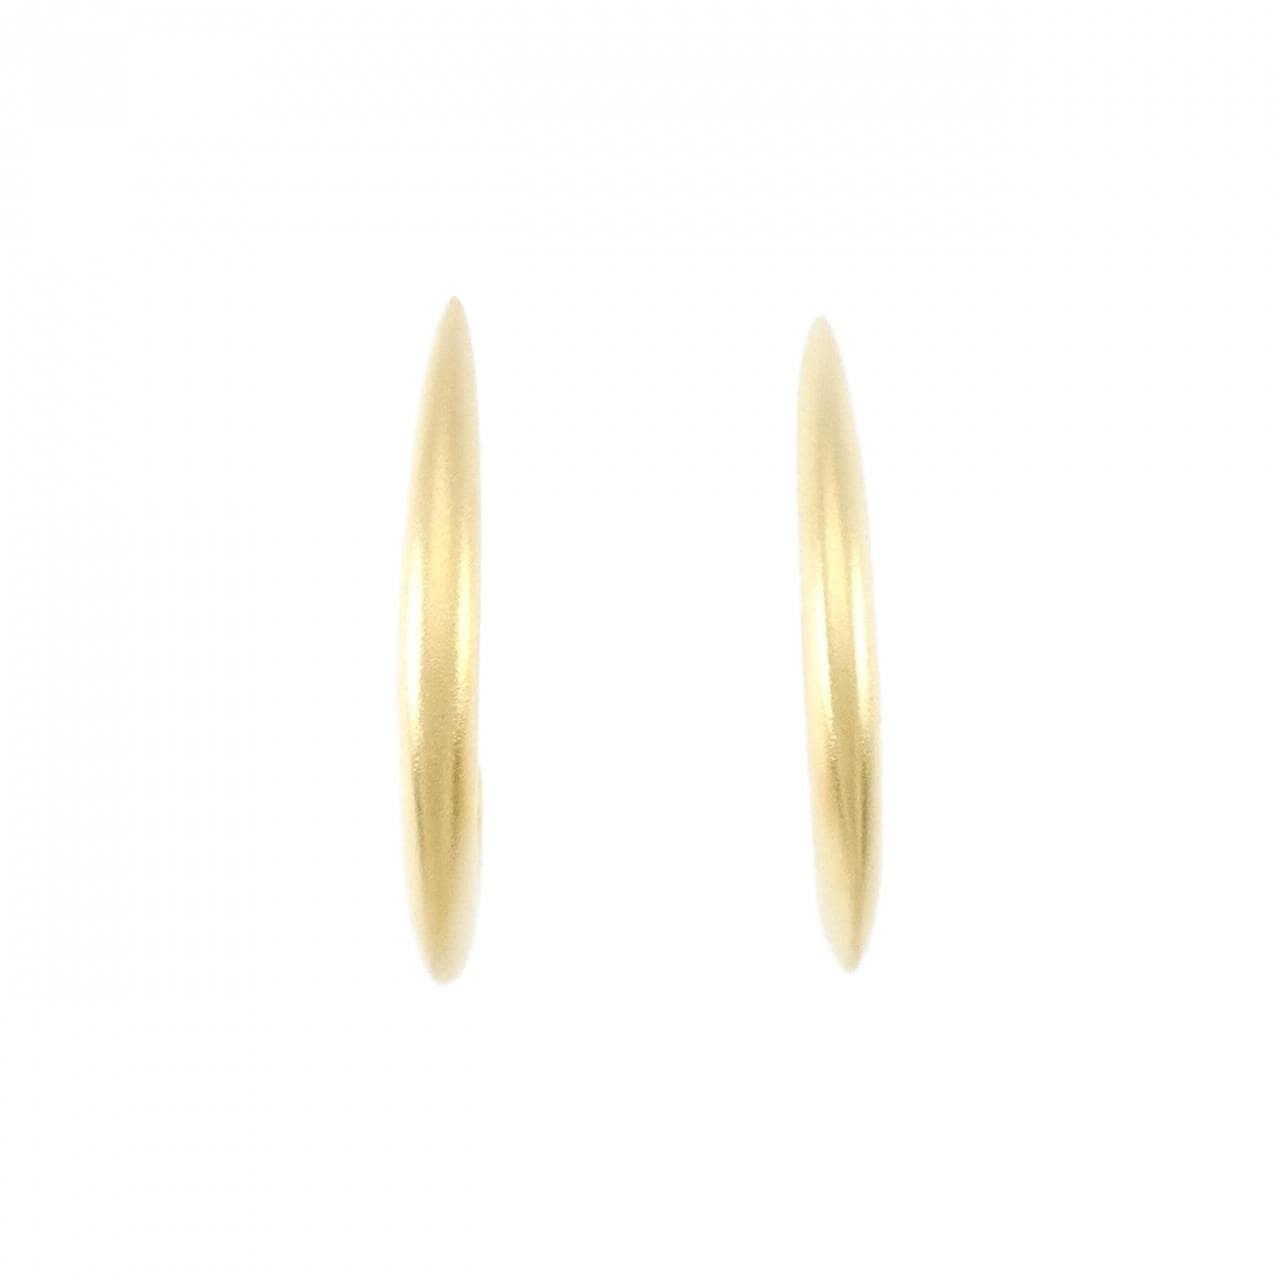 K18YG earrings